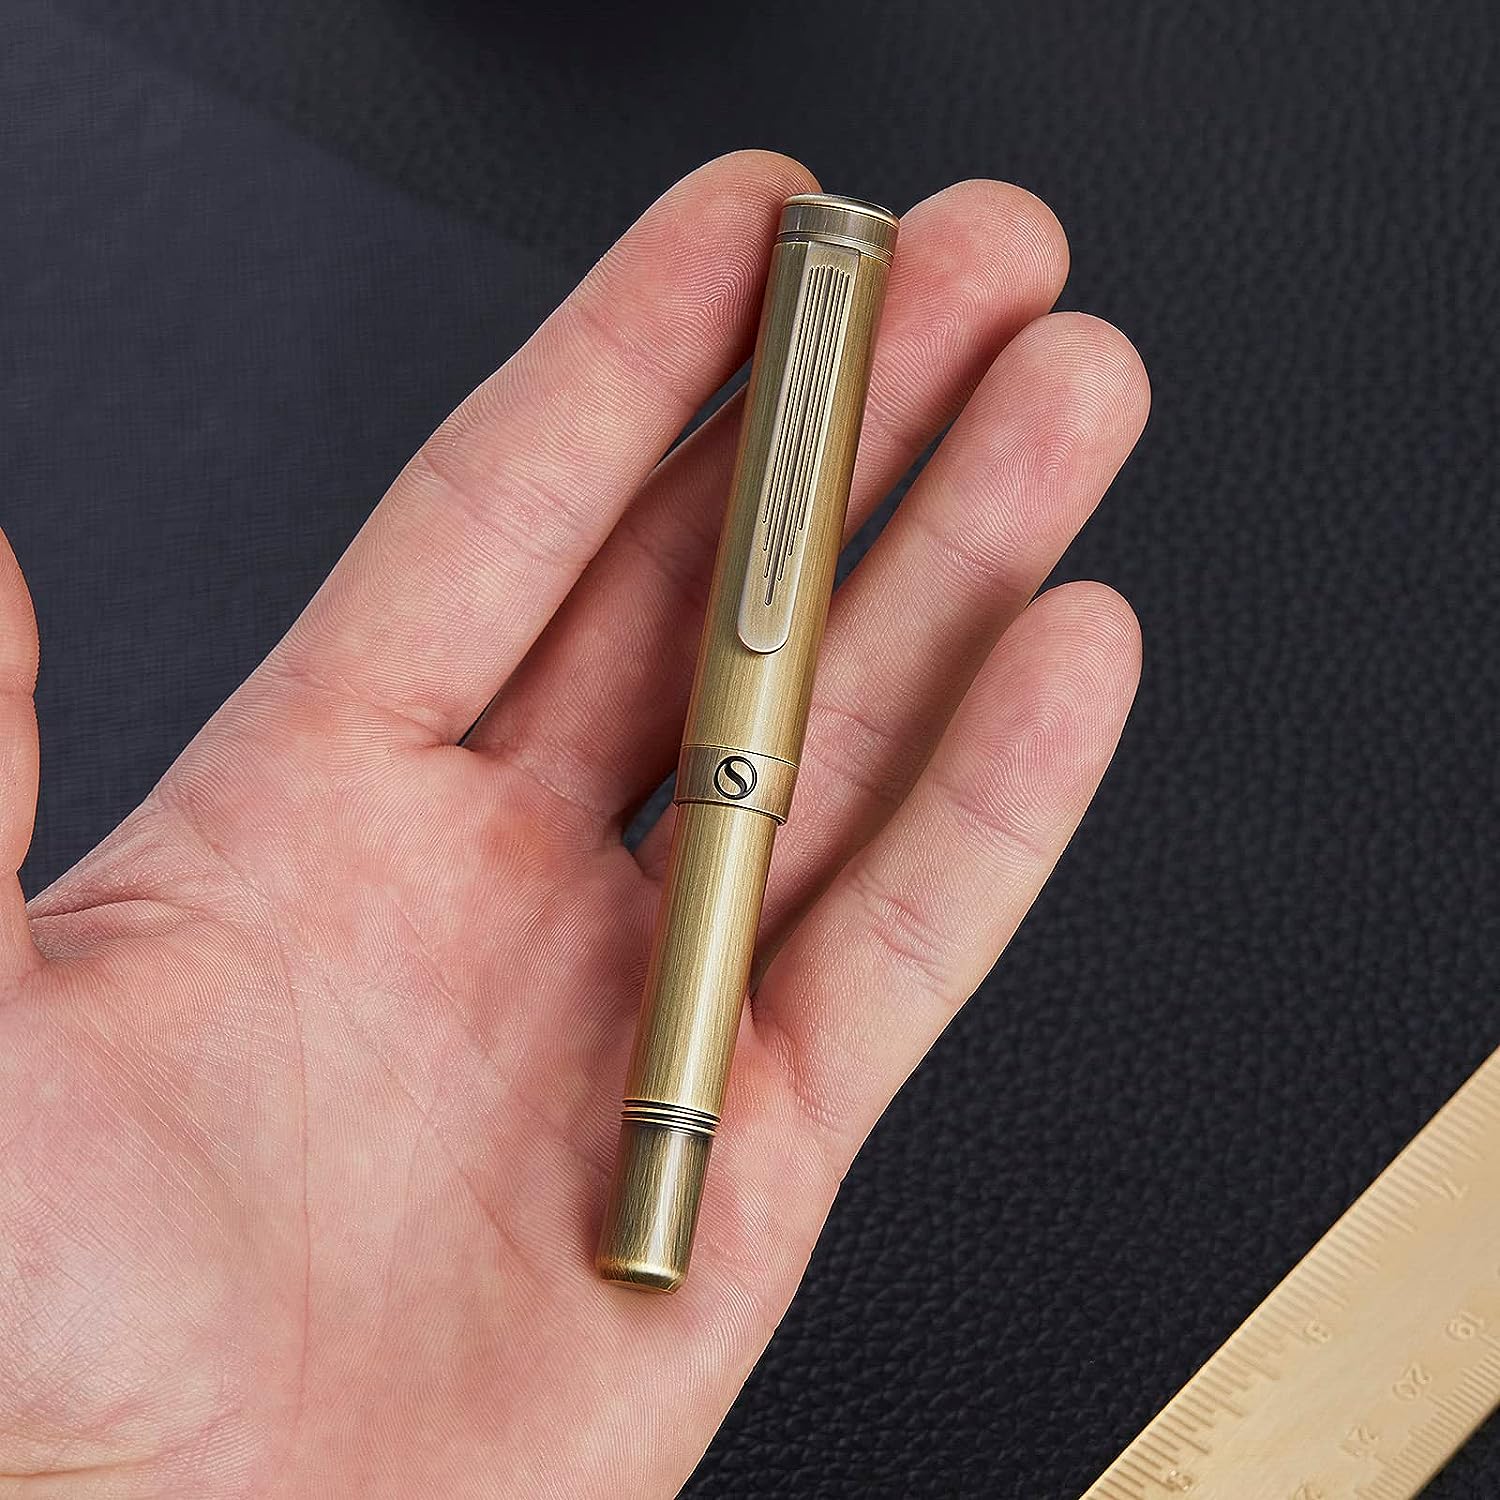 Scriveiner EDC Brass Luxury Rollerball Pen, Stunning Heavy Pocket Pen, Hand Brushed Bronze Finish